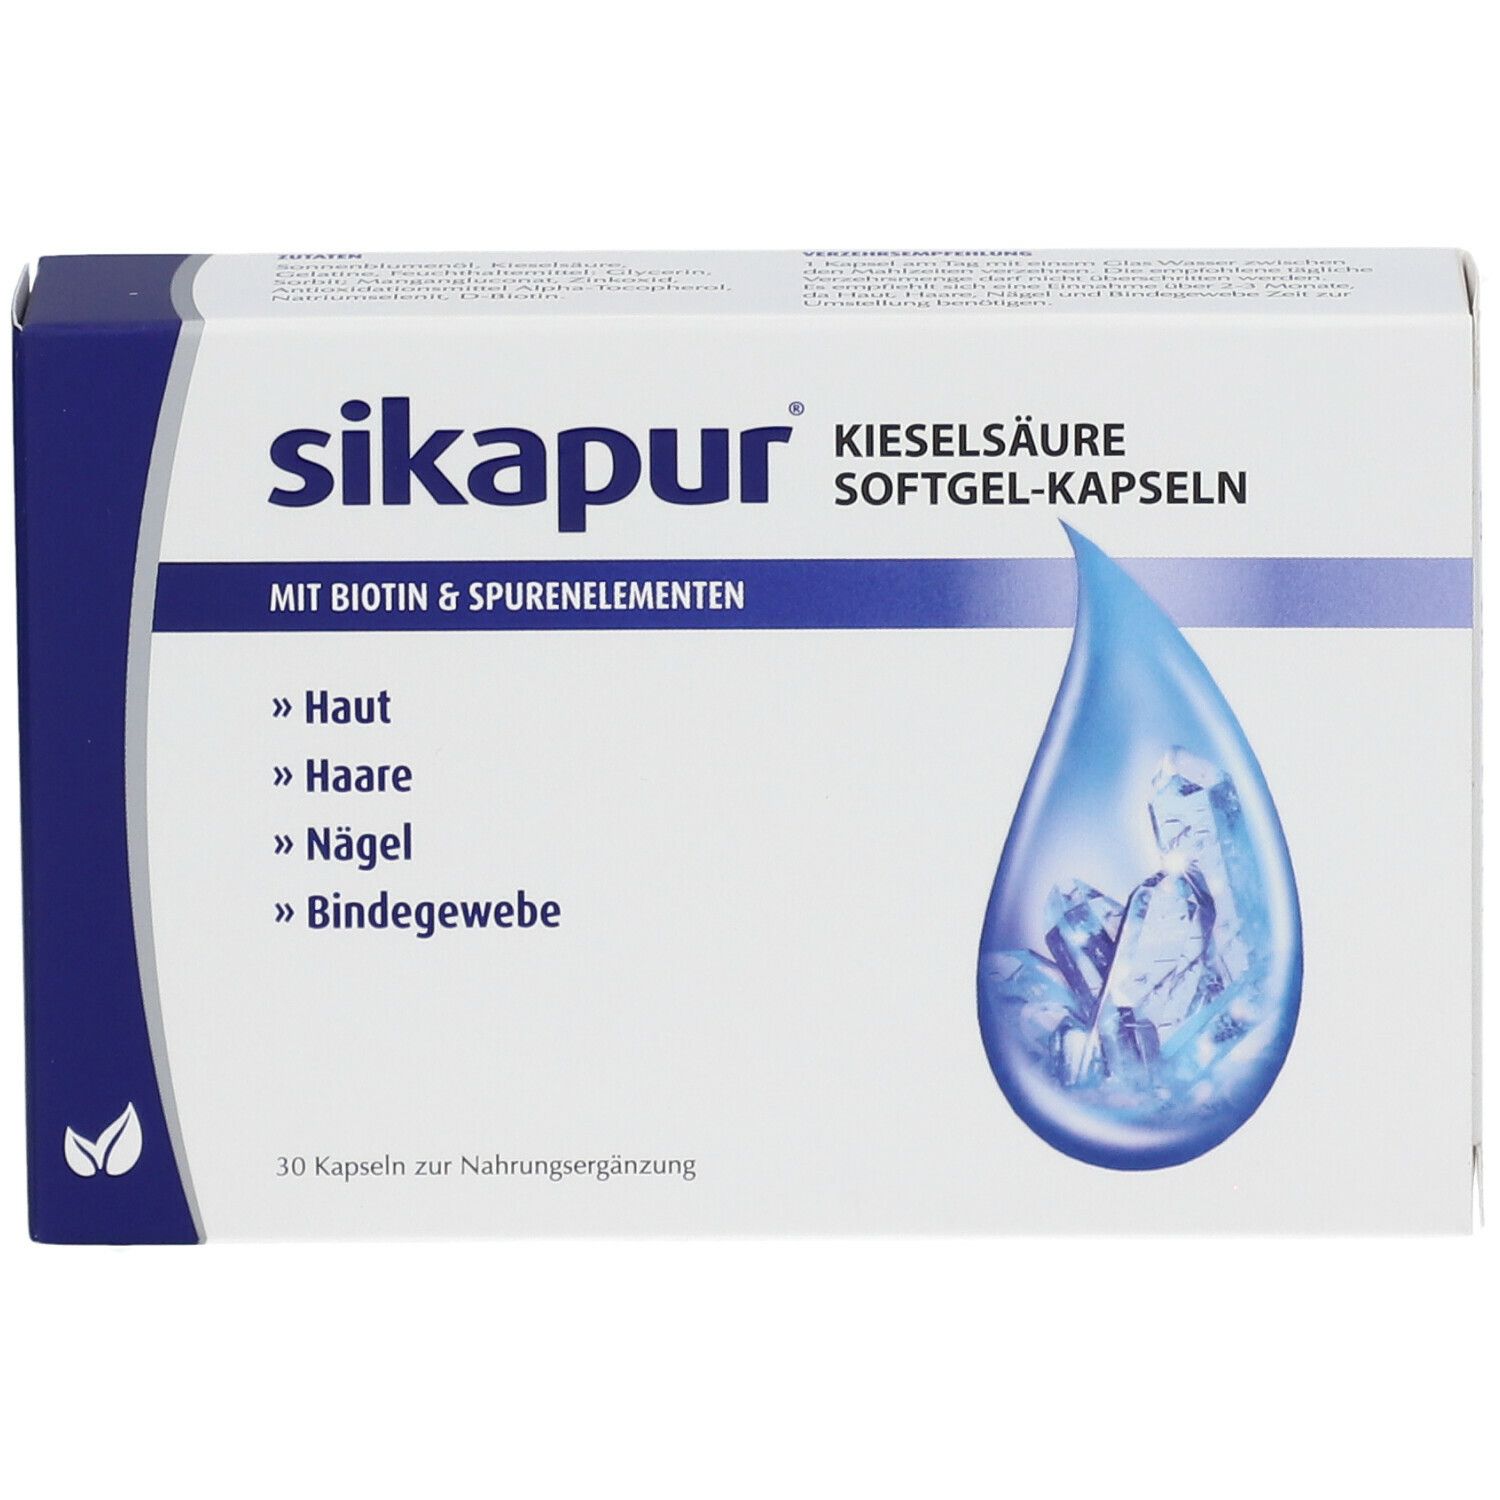 sikapur® Kieselsäure Softgel-Kapseln